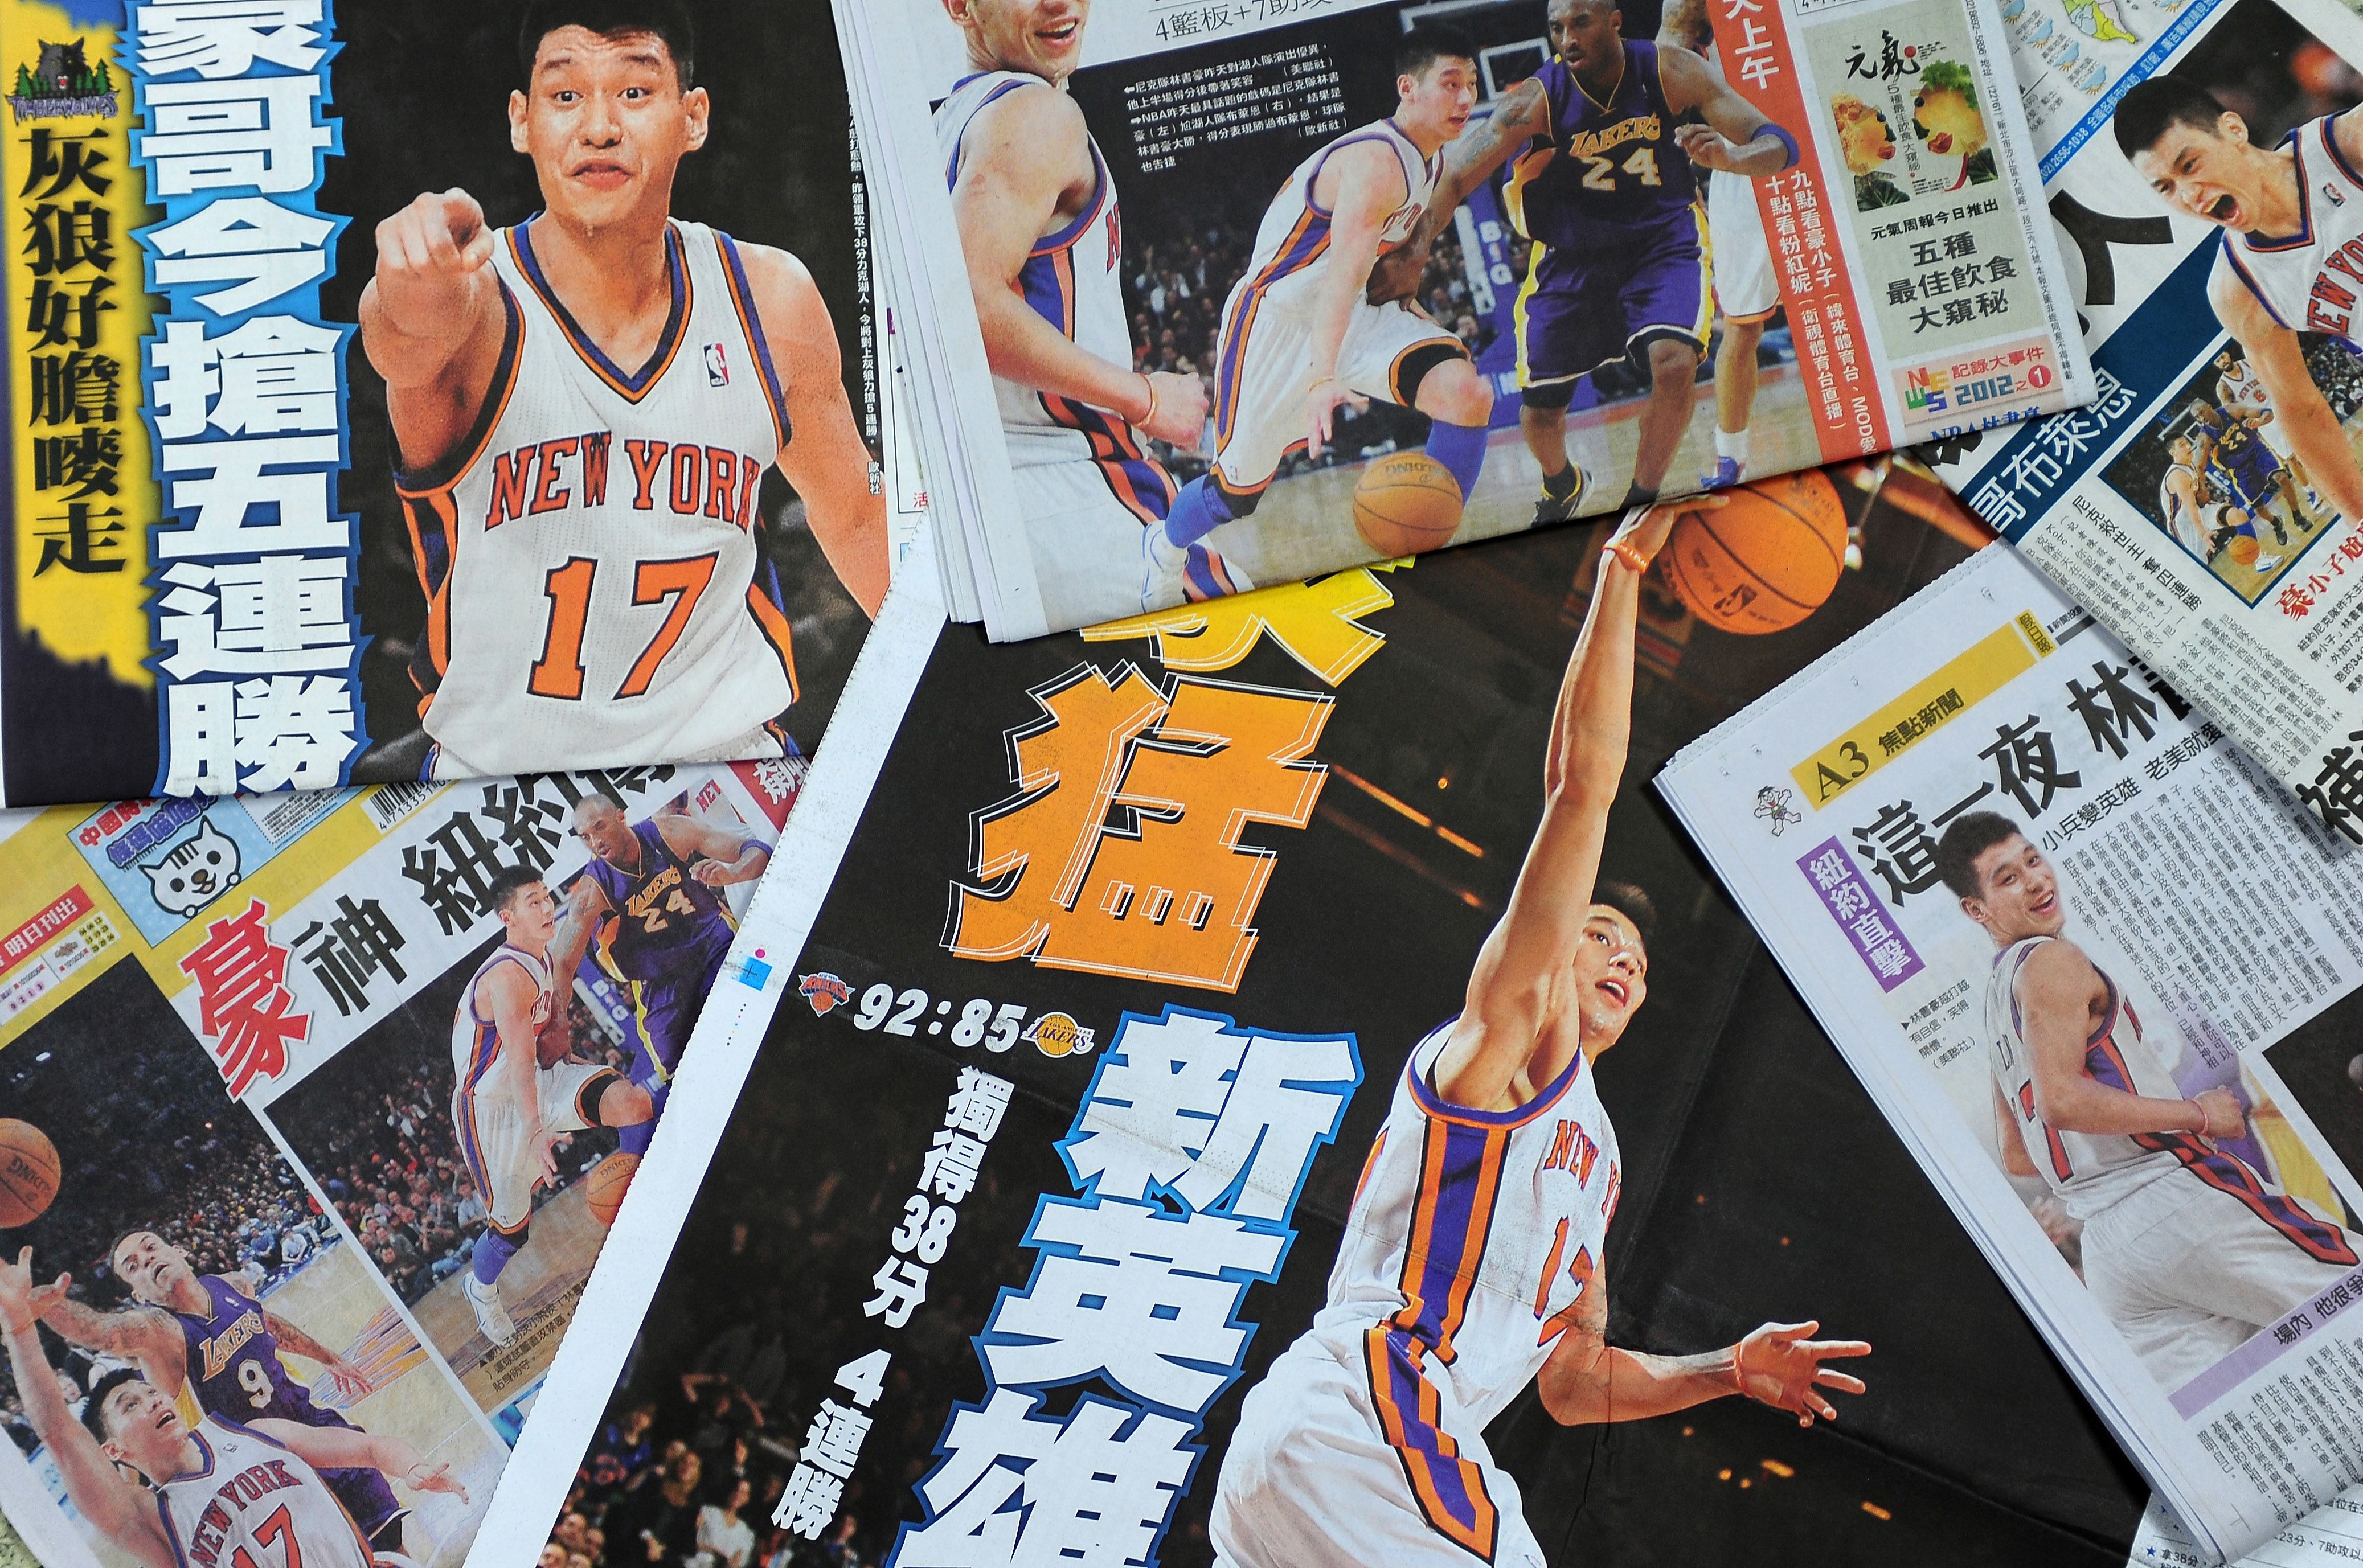 Houston Rockets sign Jeremy Lin as New York won't match offer